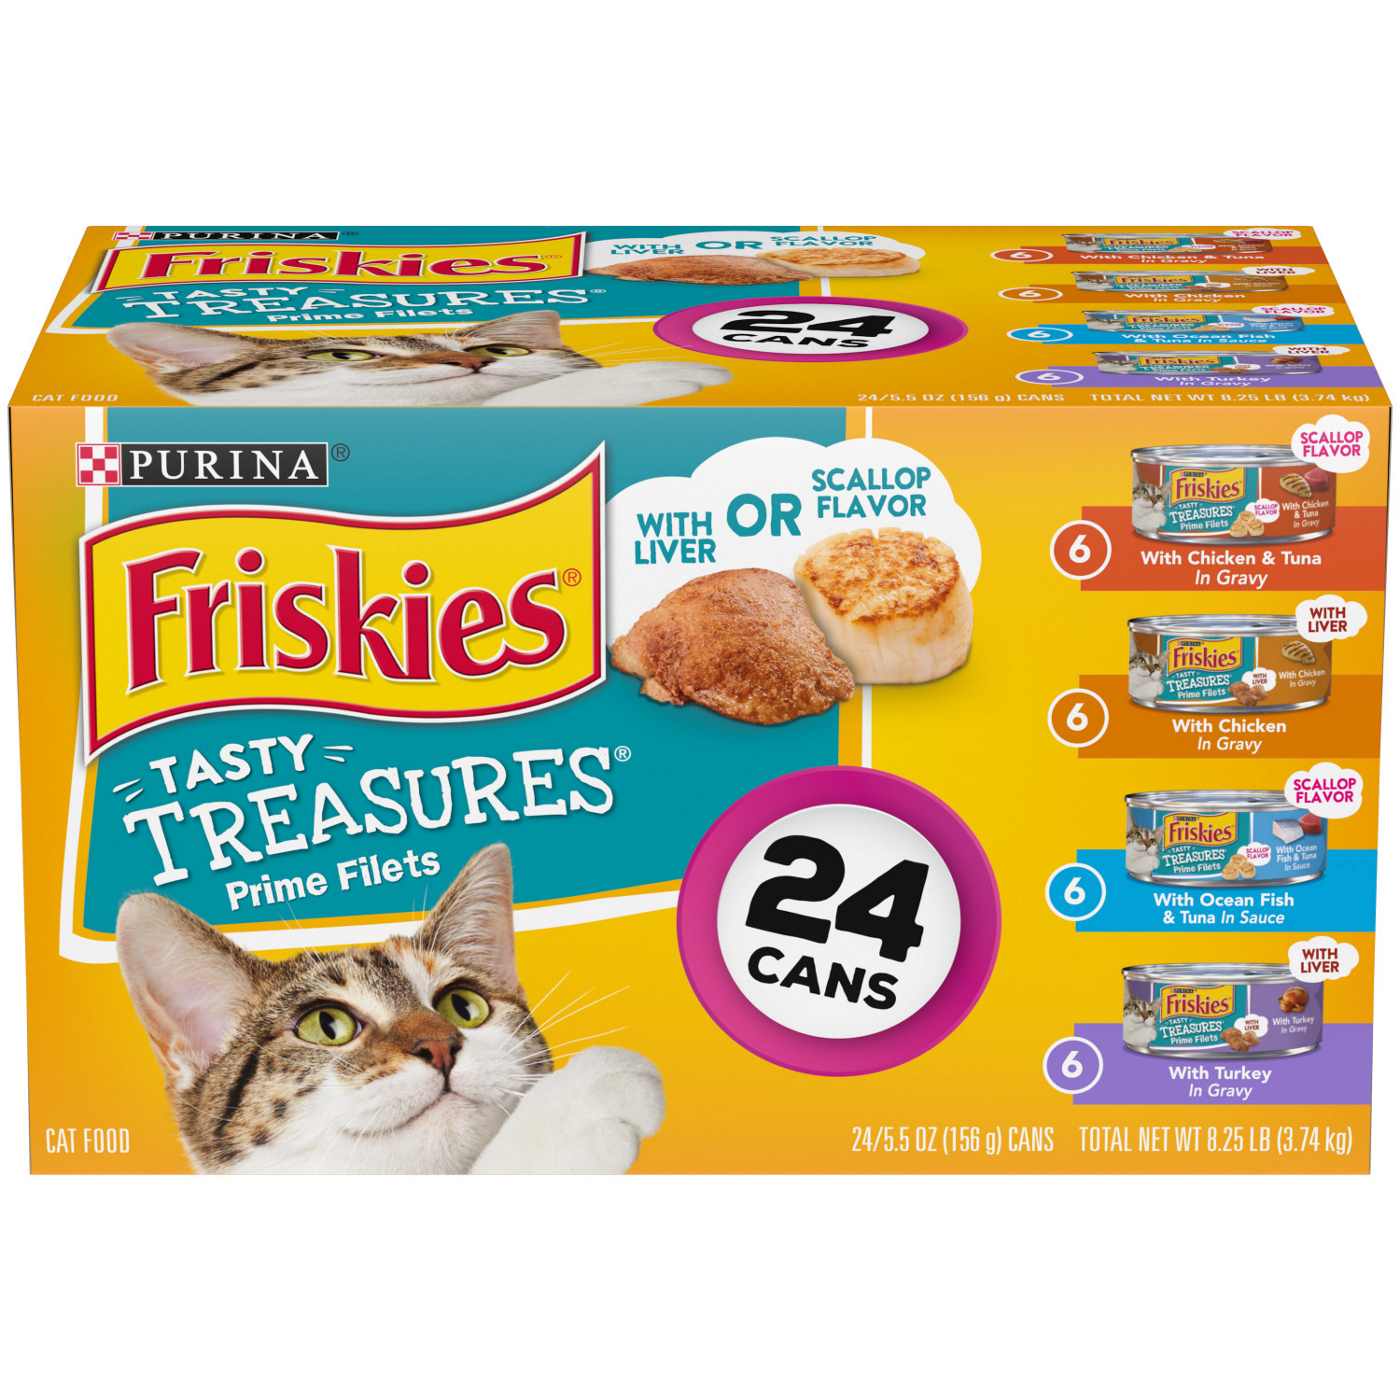 Friskies Purina Friskies Gravy Wet Cat Food Variety Pack, Tasty Treasures Prime Filets; image 1 of 7